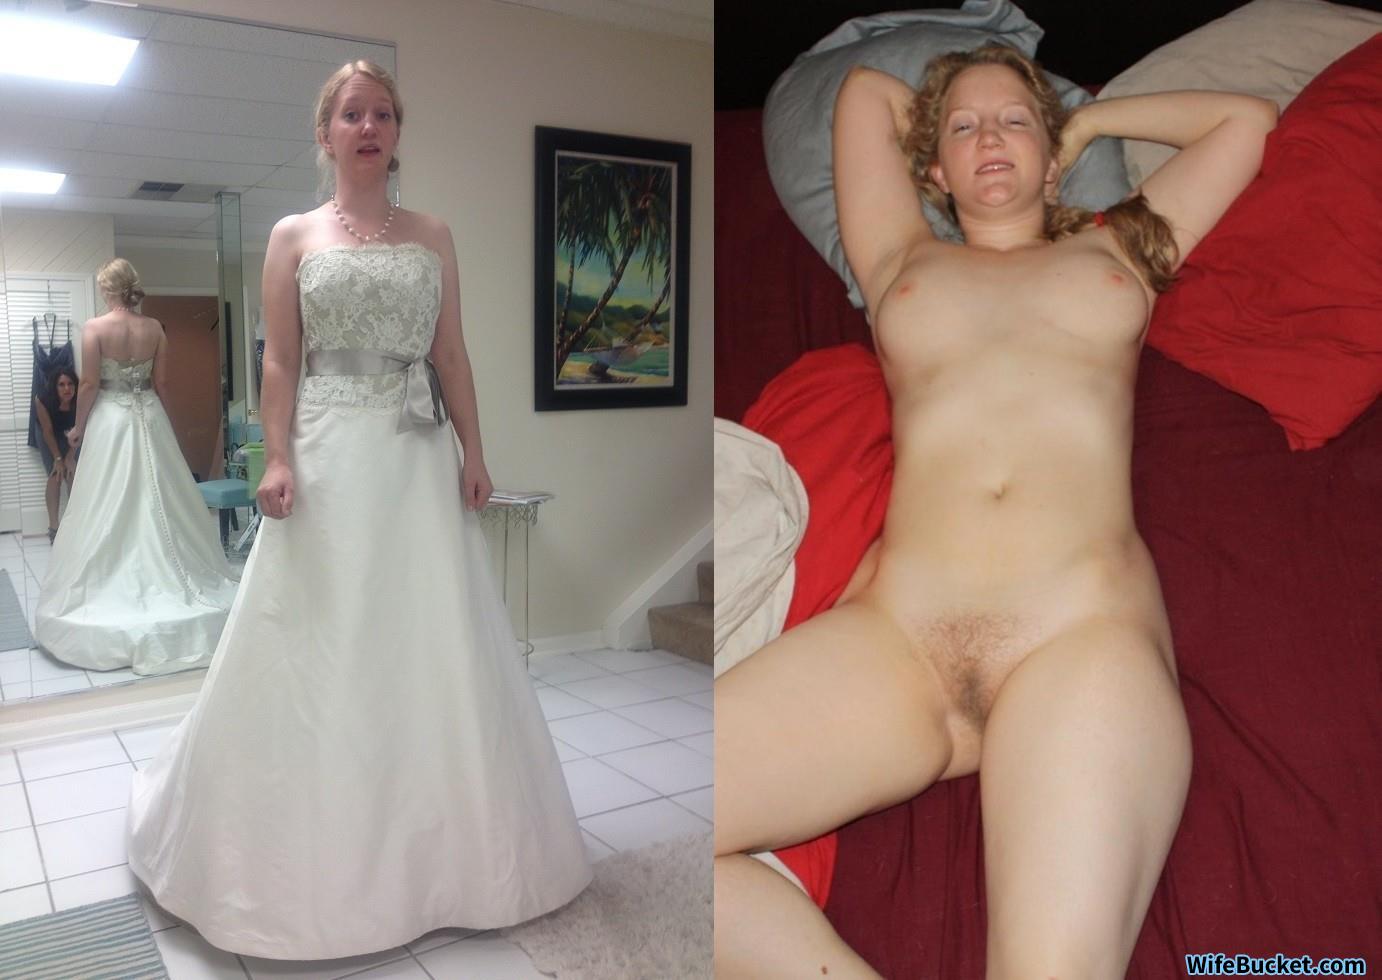 Before-after sex pics â€“ WifeBucket | Offical MILF Blog